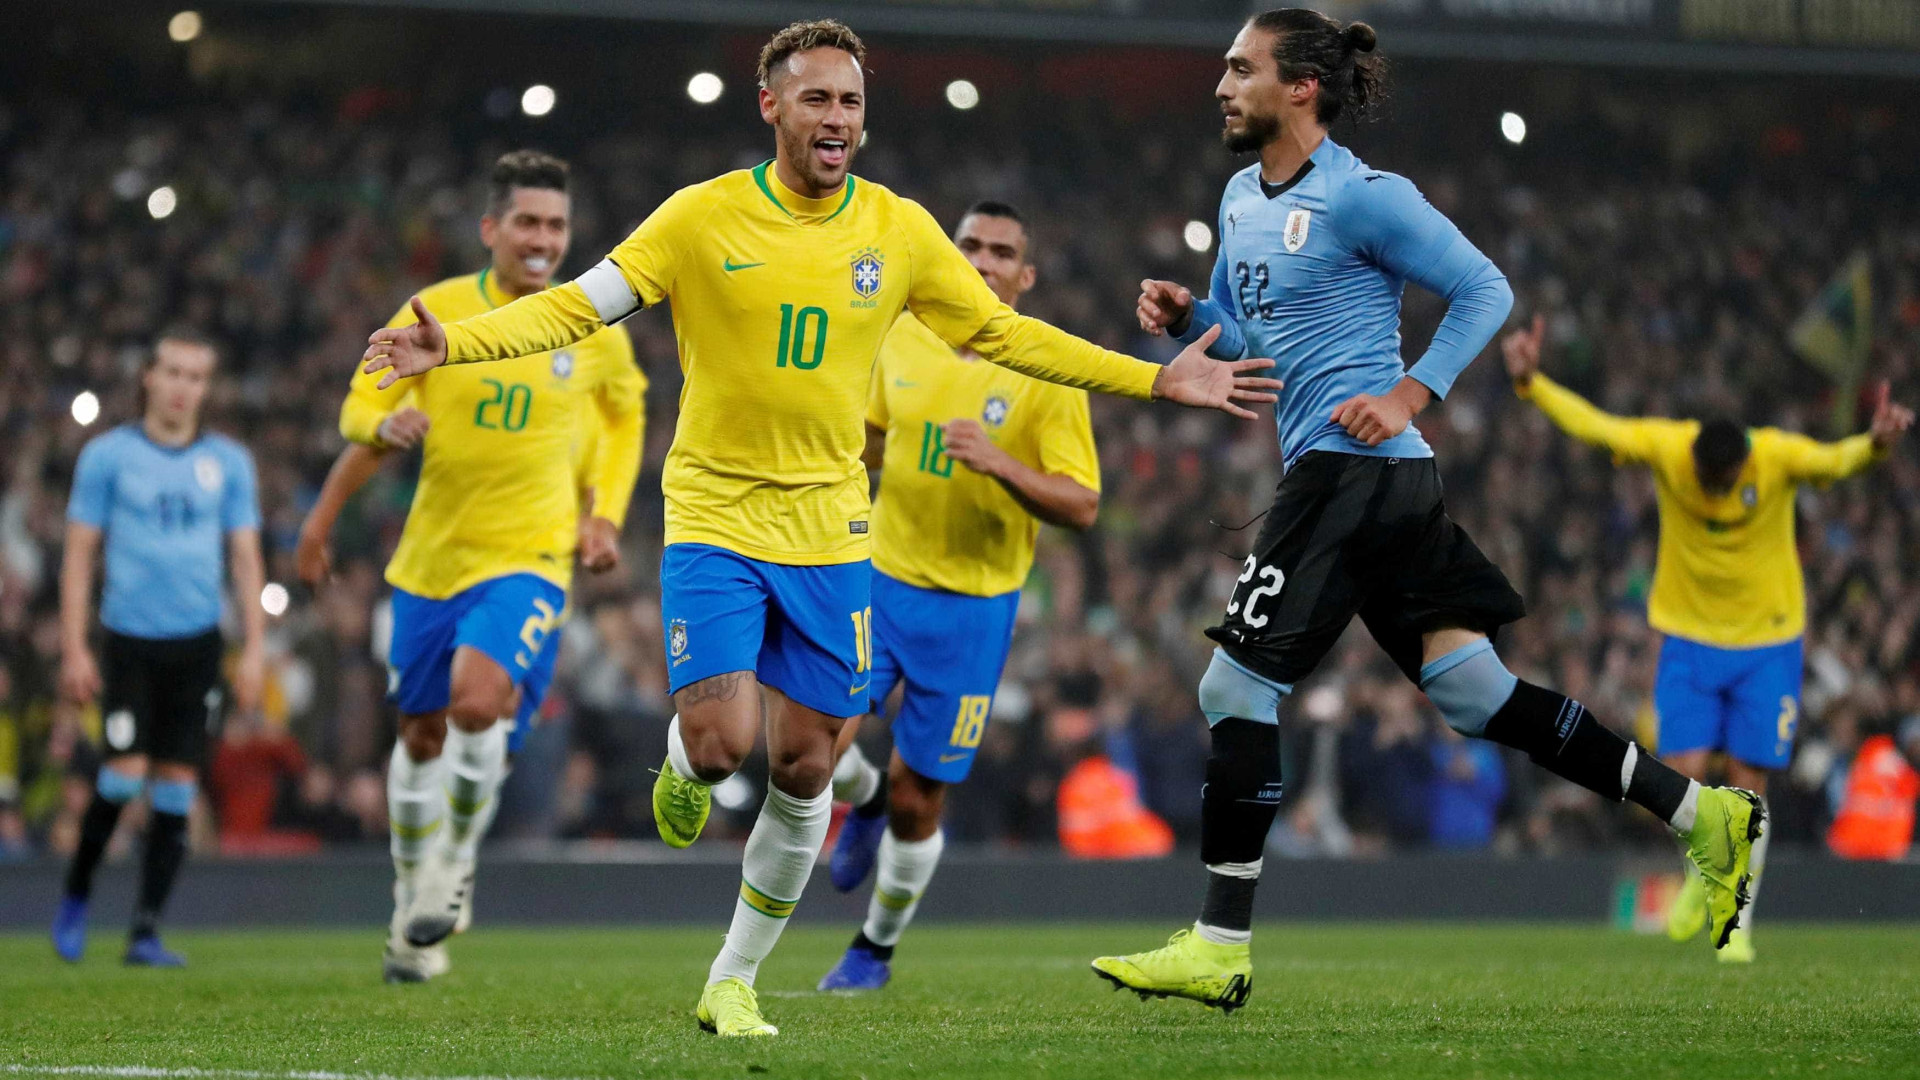 Mídia mundial destaca falta de Cavani em Neymar